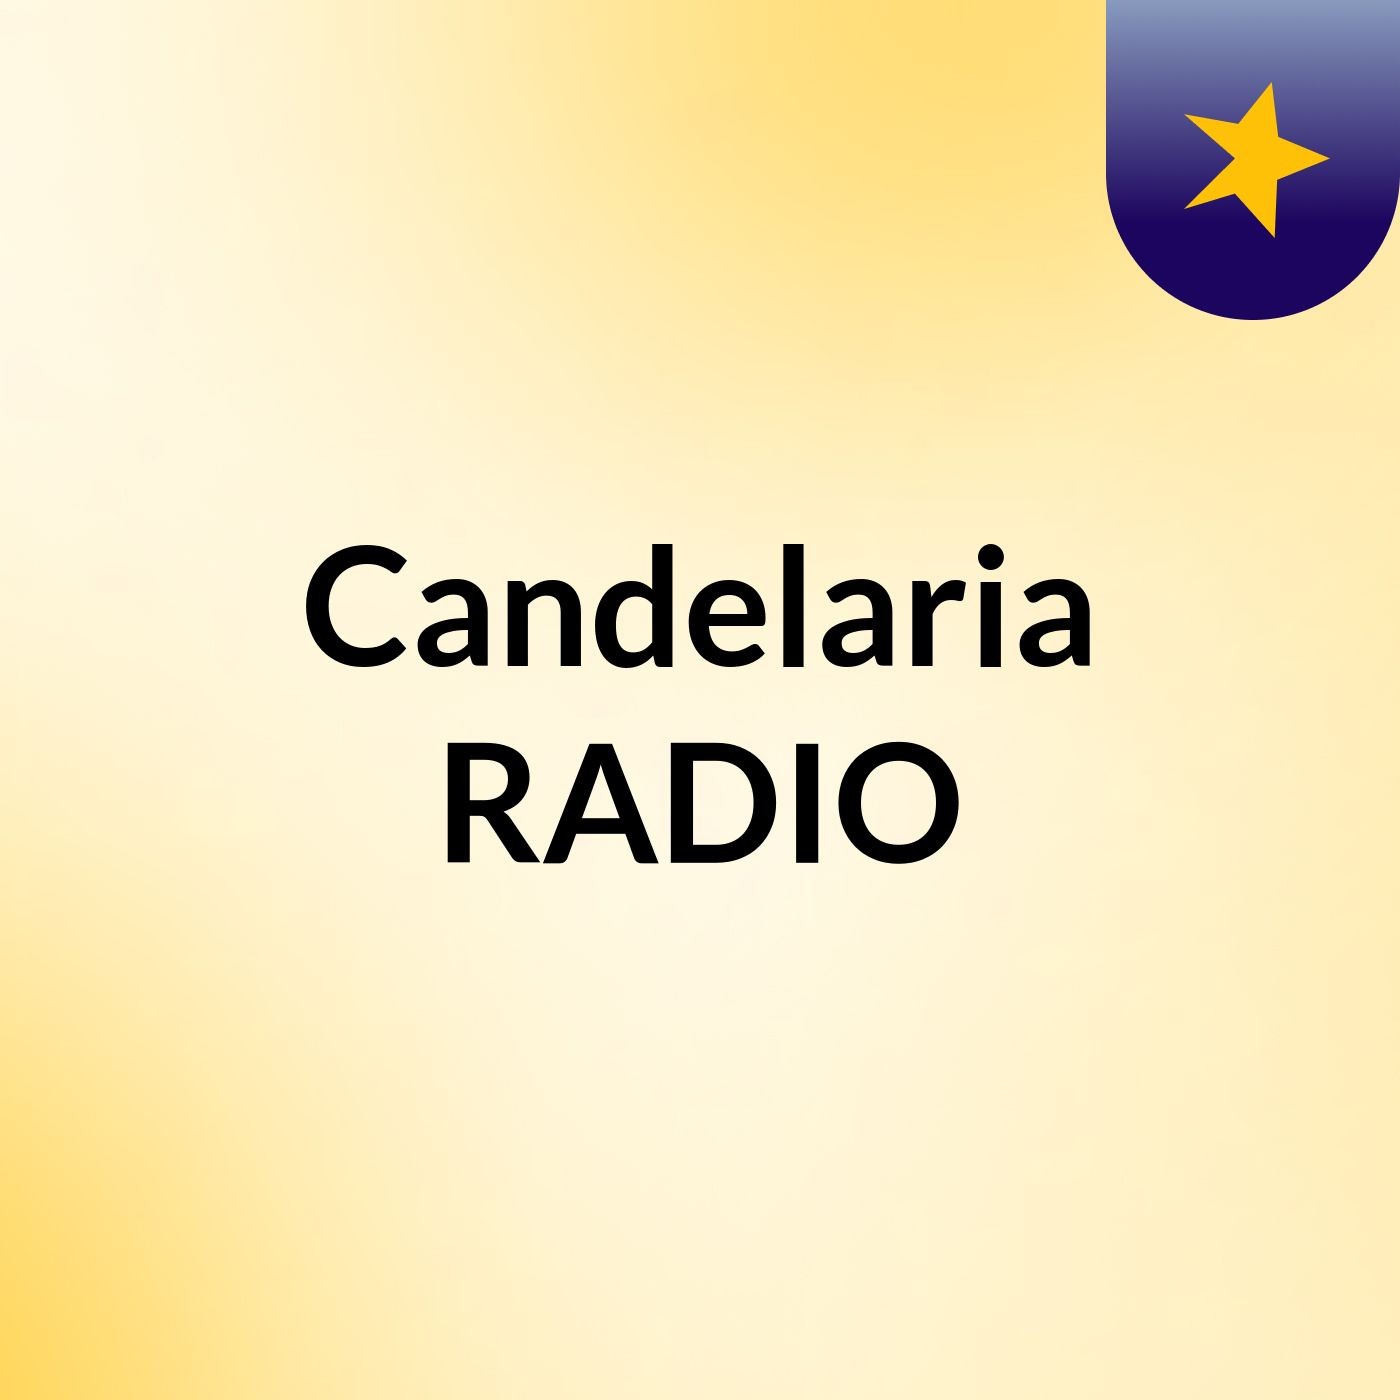 Candelaria RADIO